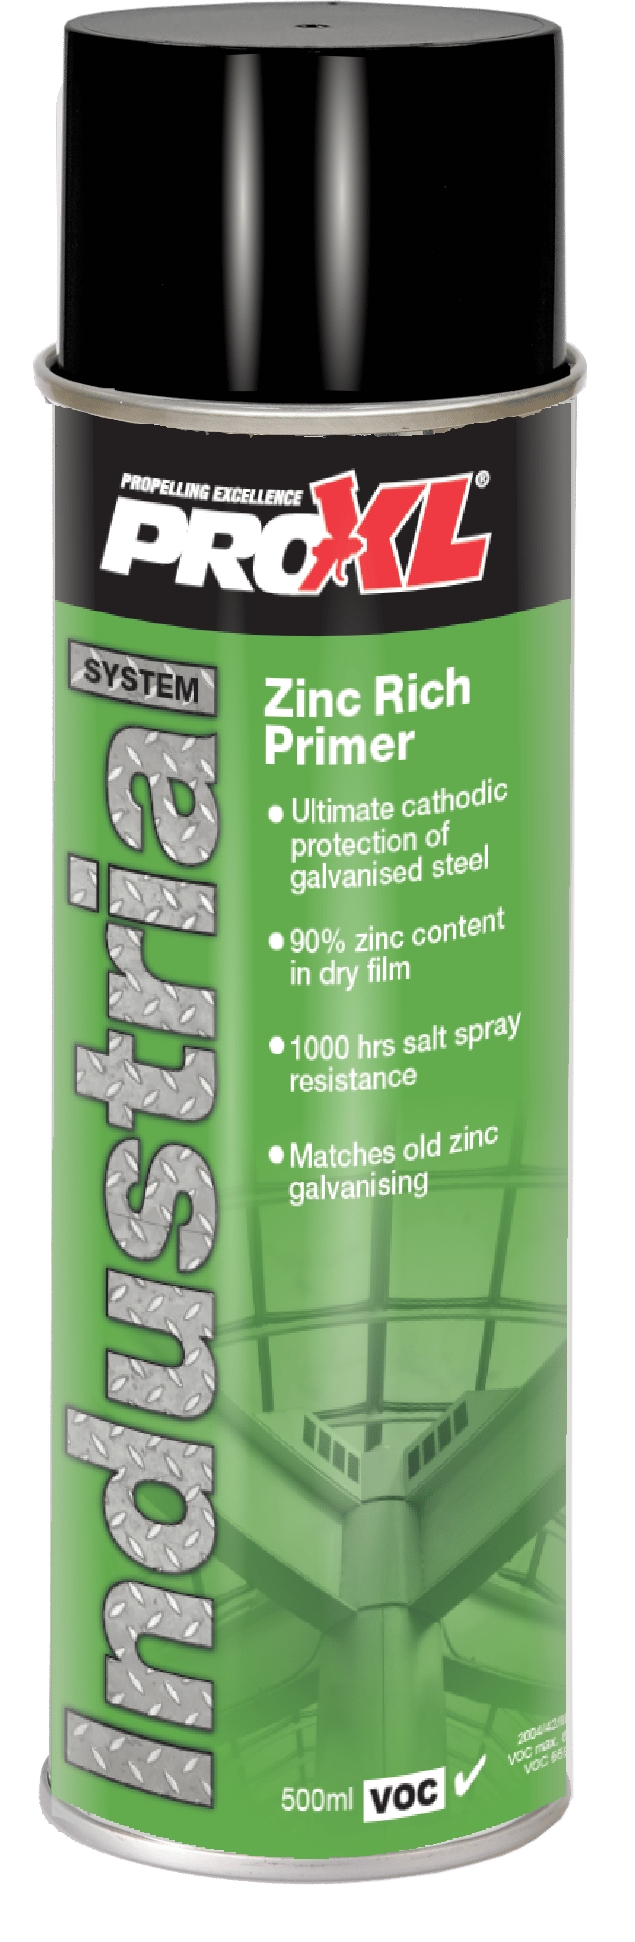 Zinc Rich Primer Aerosol (500ml) Product Image